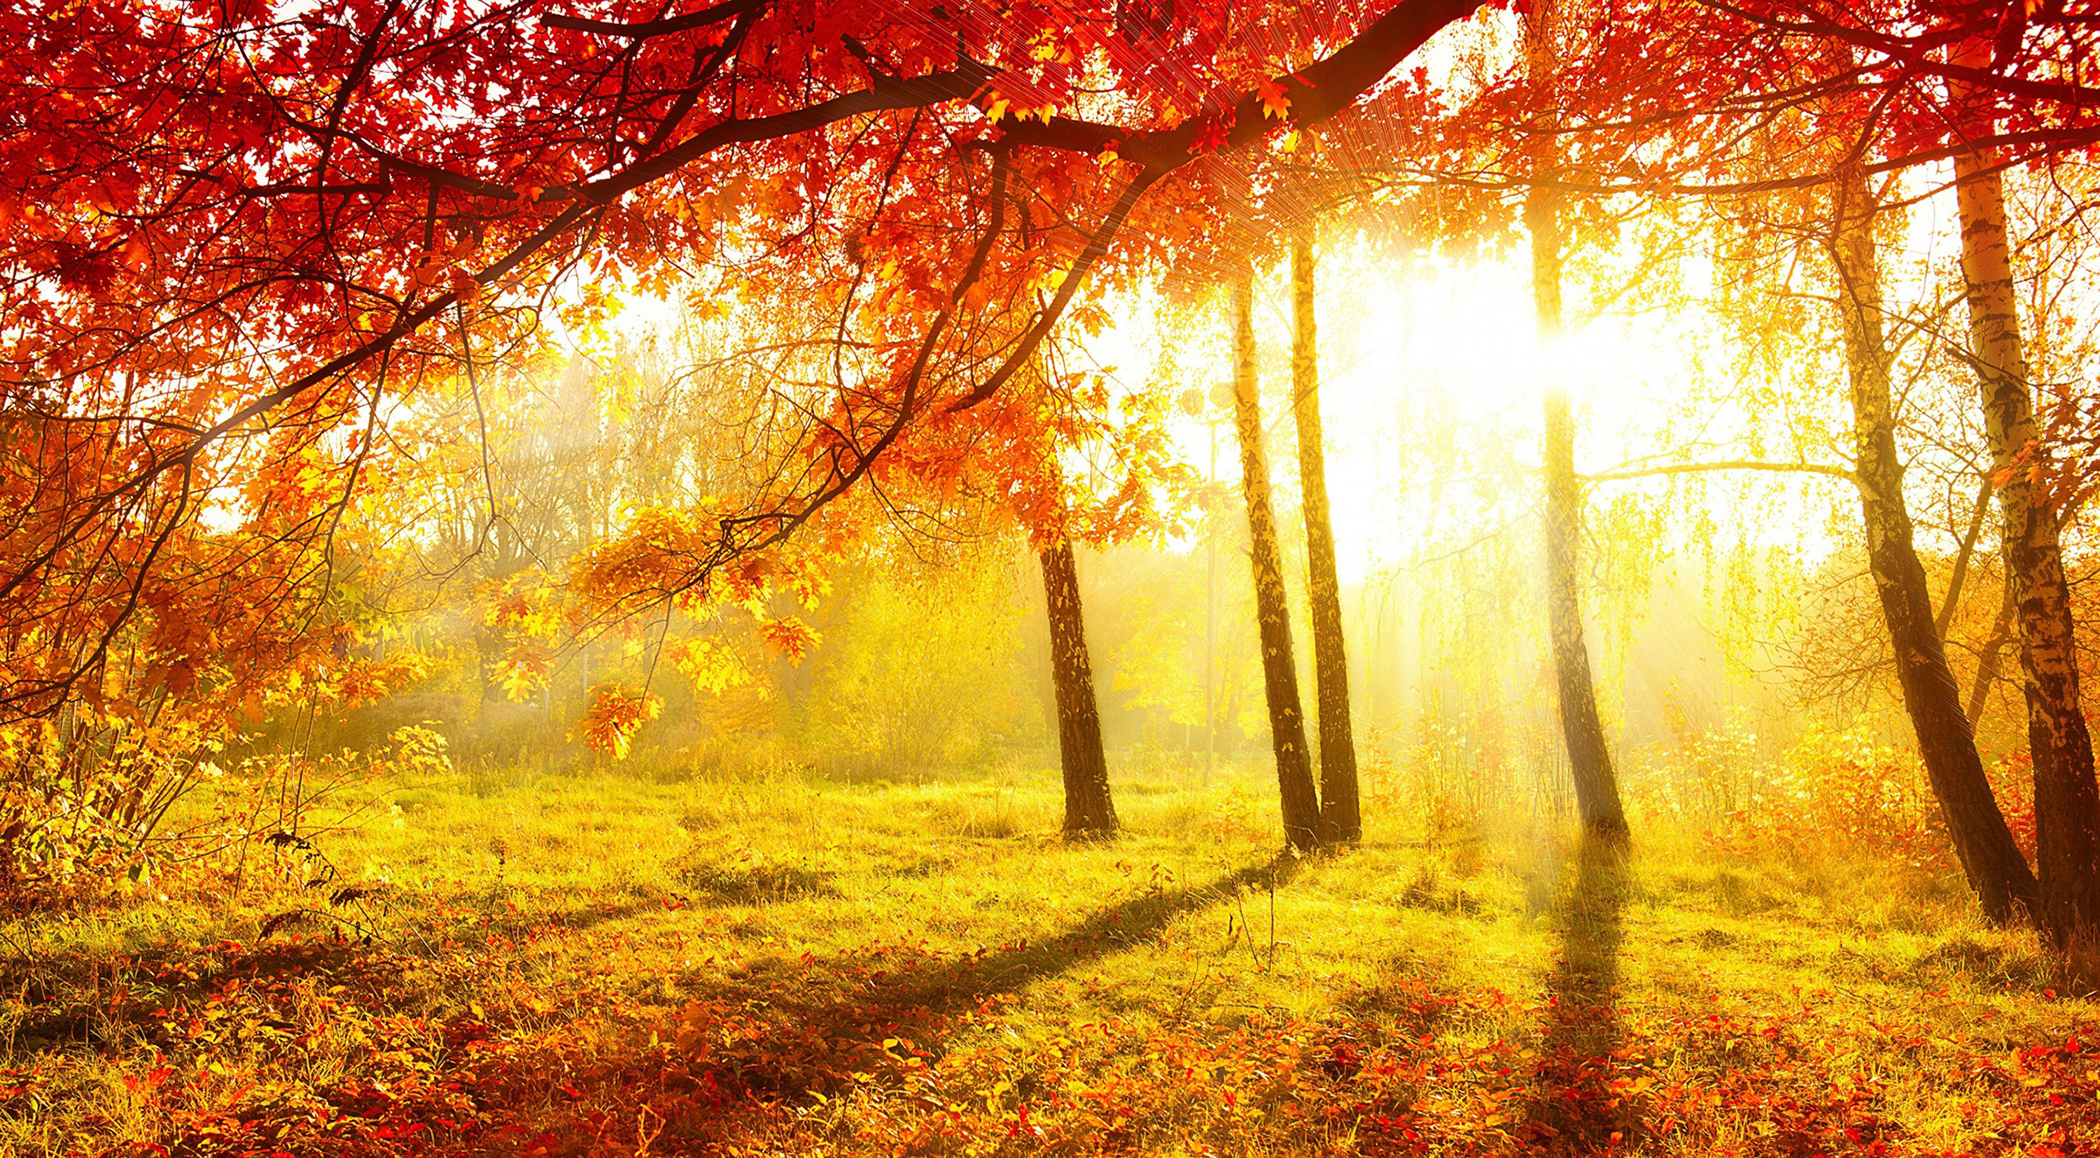 Golden Autumn 53921 - Autumn Theme - Landscape scenery